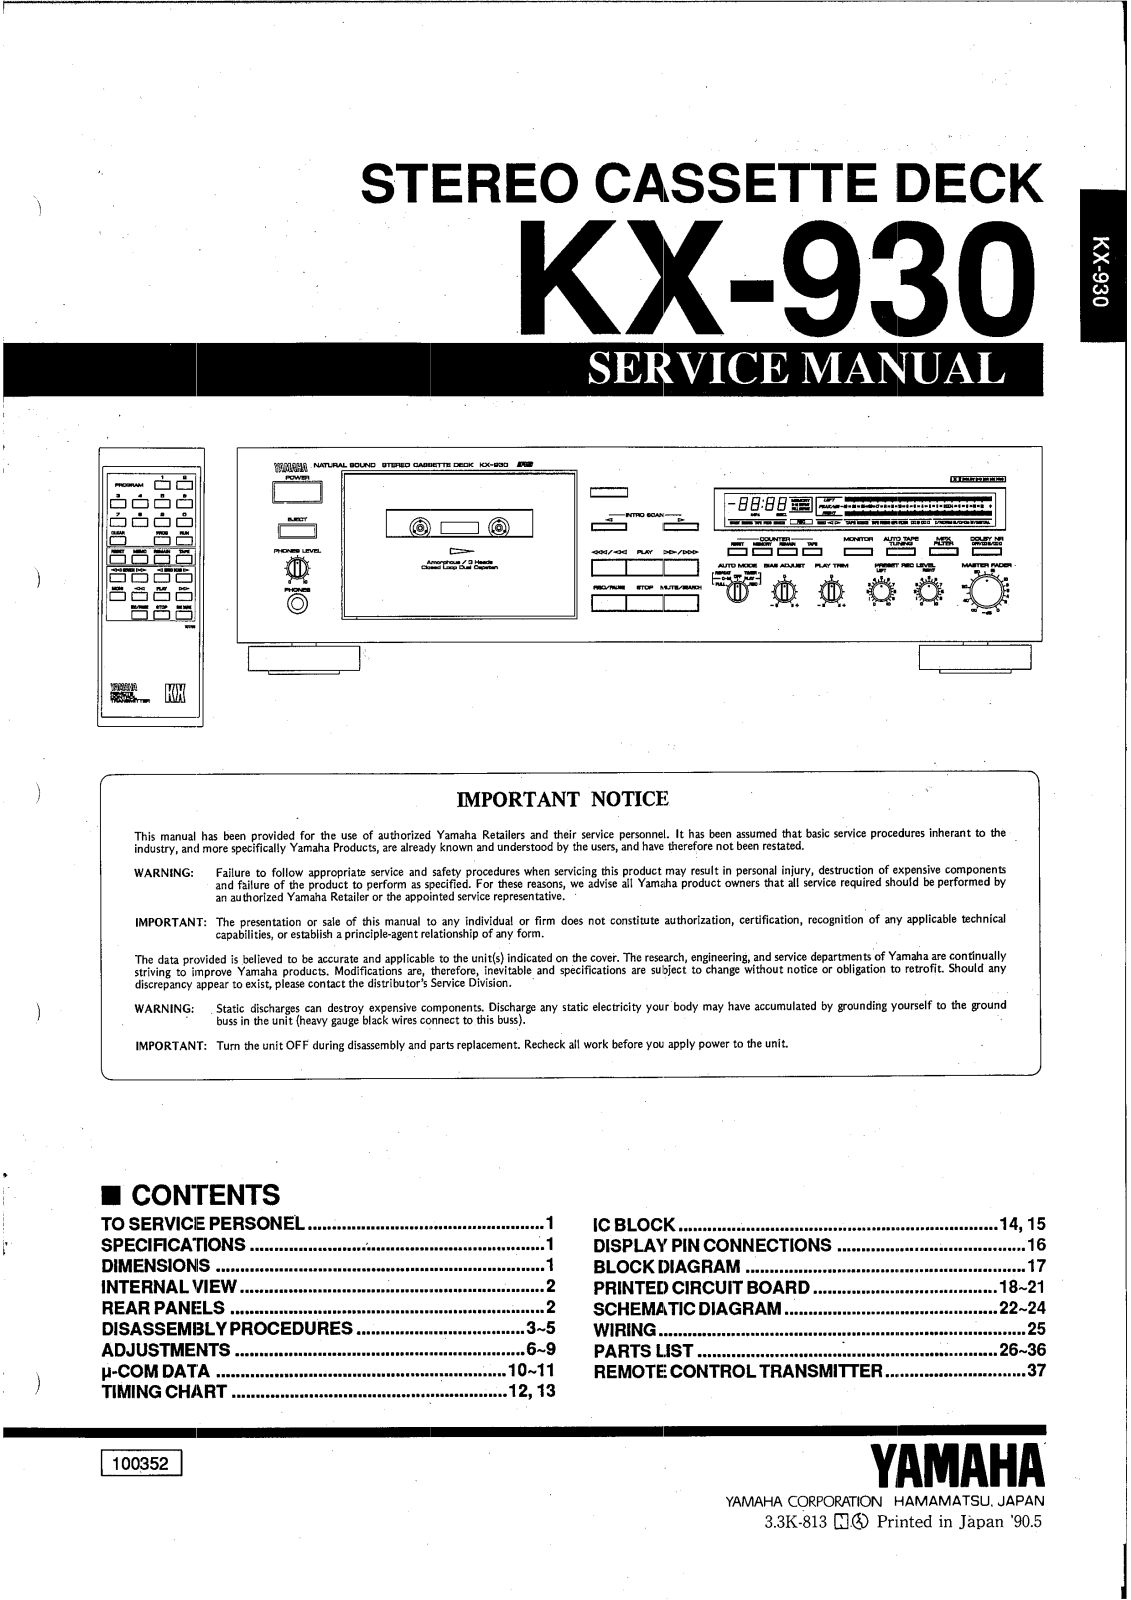 Yamaha KX-930 Service manual